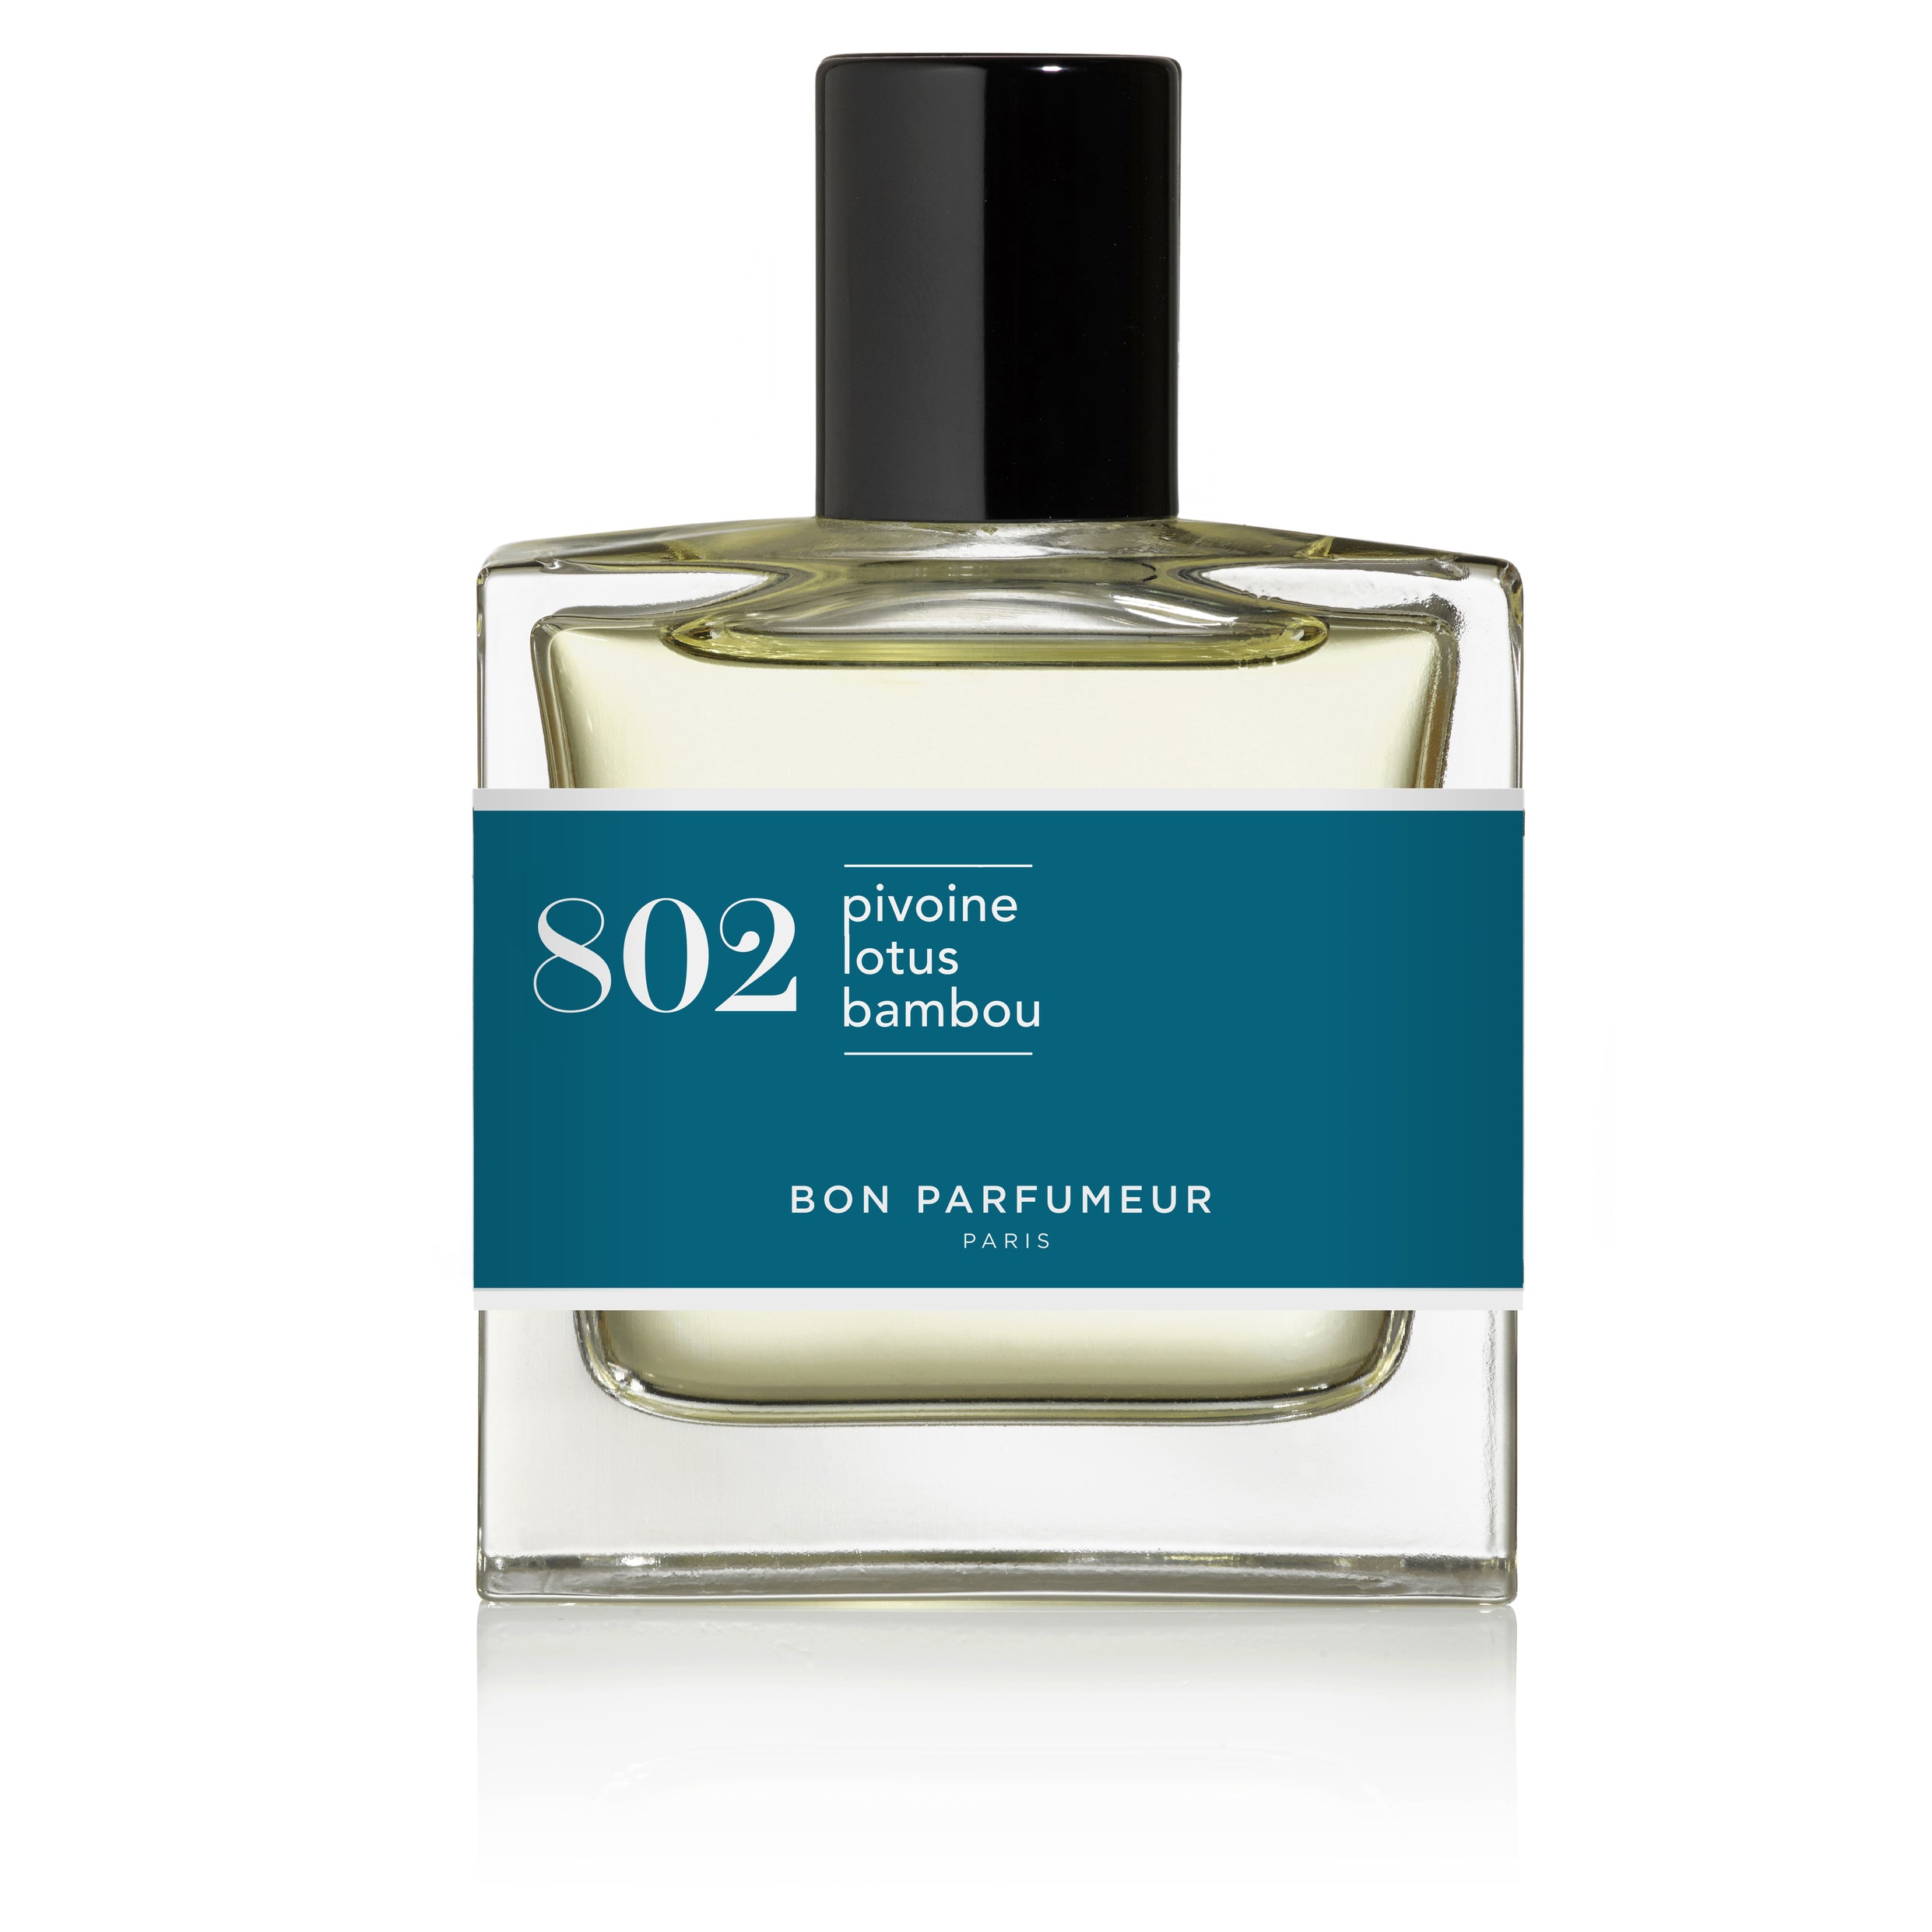 Bon Parfumeur - Les Classiques 802 - Danae Profumeria